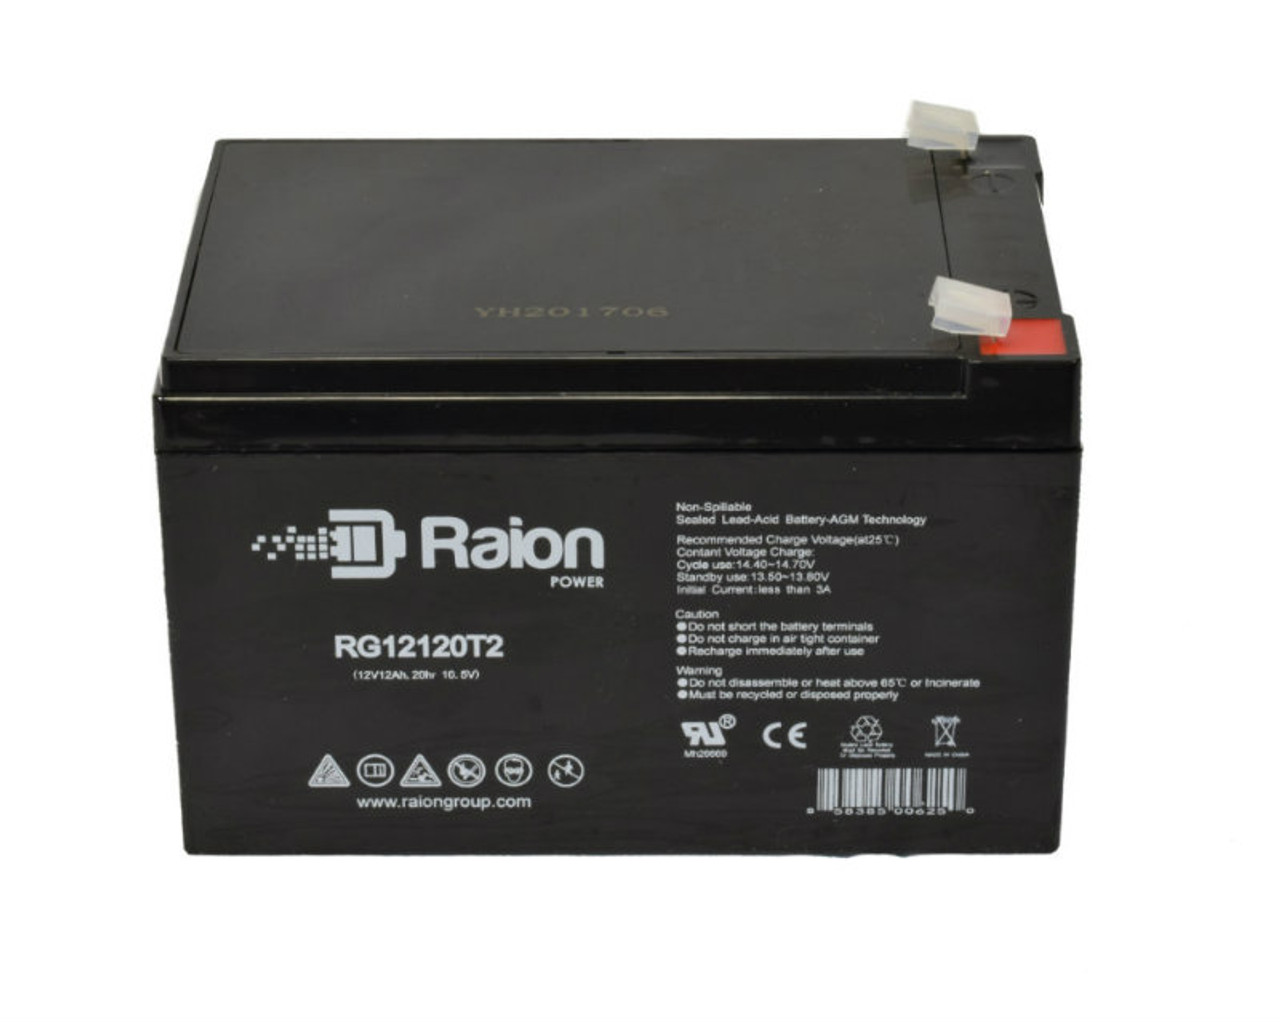 Raion Power RG12120T2 SLA Battery for Expocell P212/120